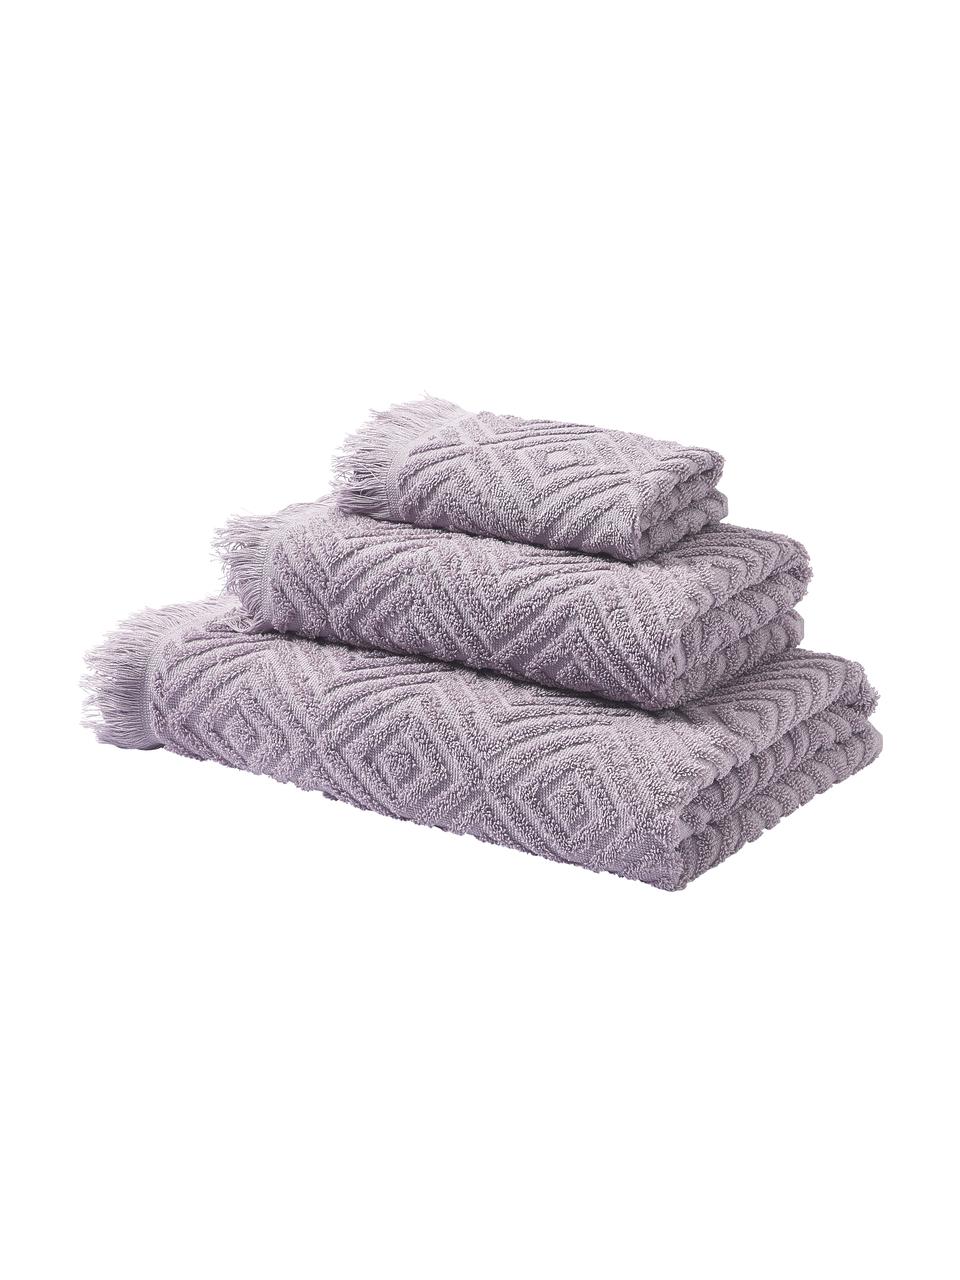 Set 3 asciugamani con motivo alto-basso Jacqui, Lavanda, Set in varie misure